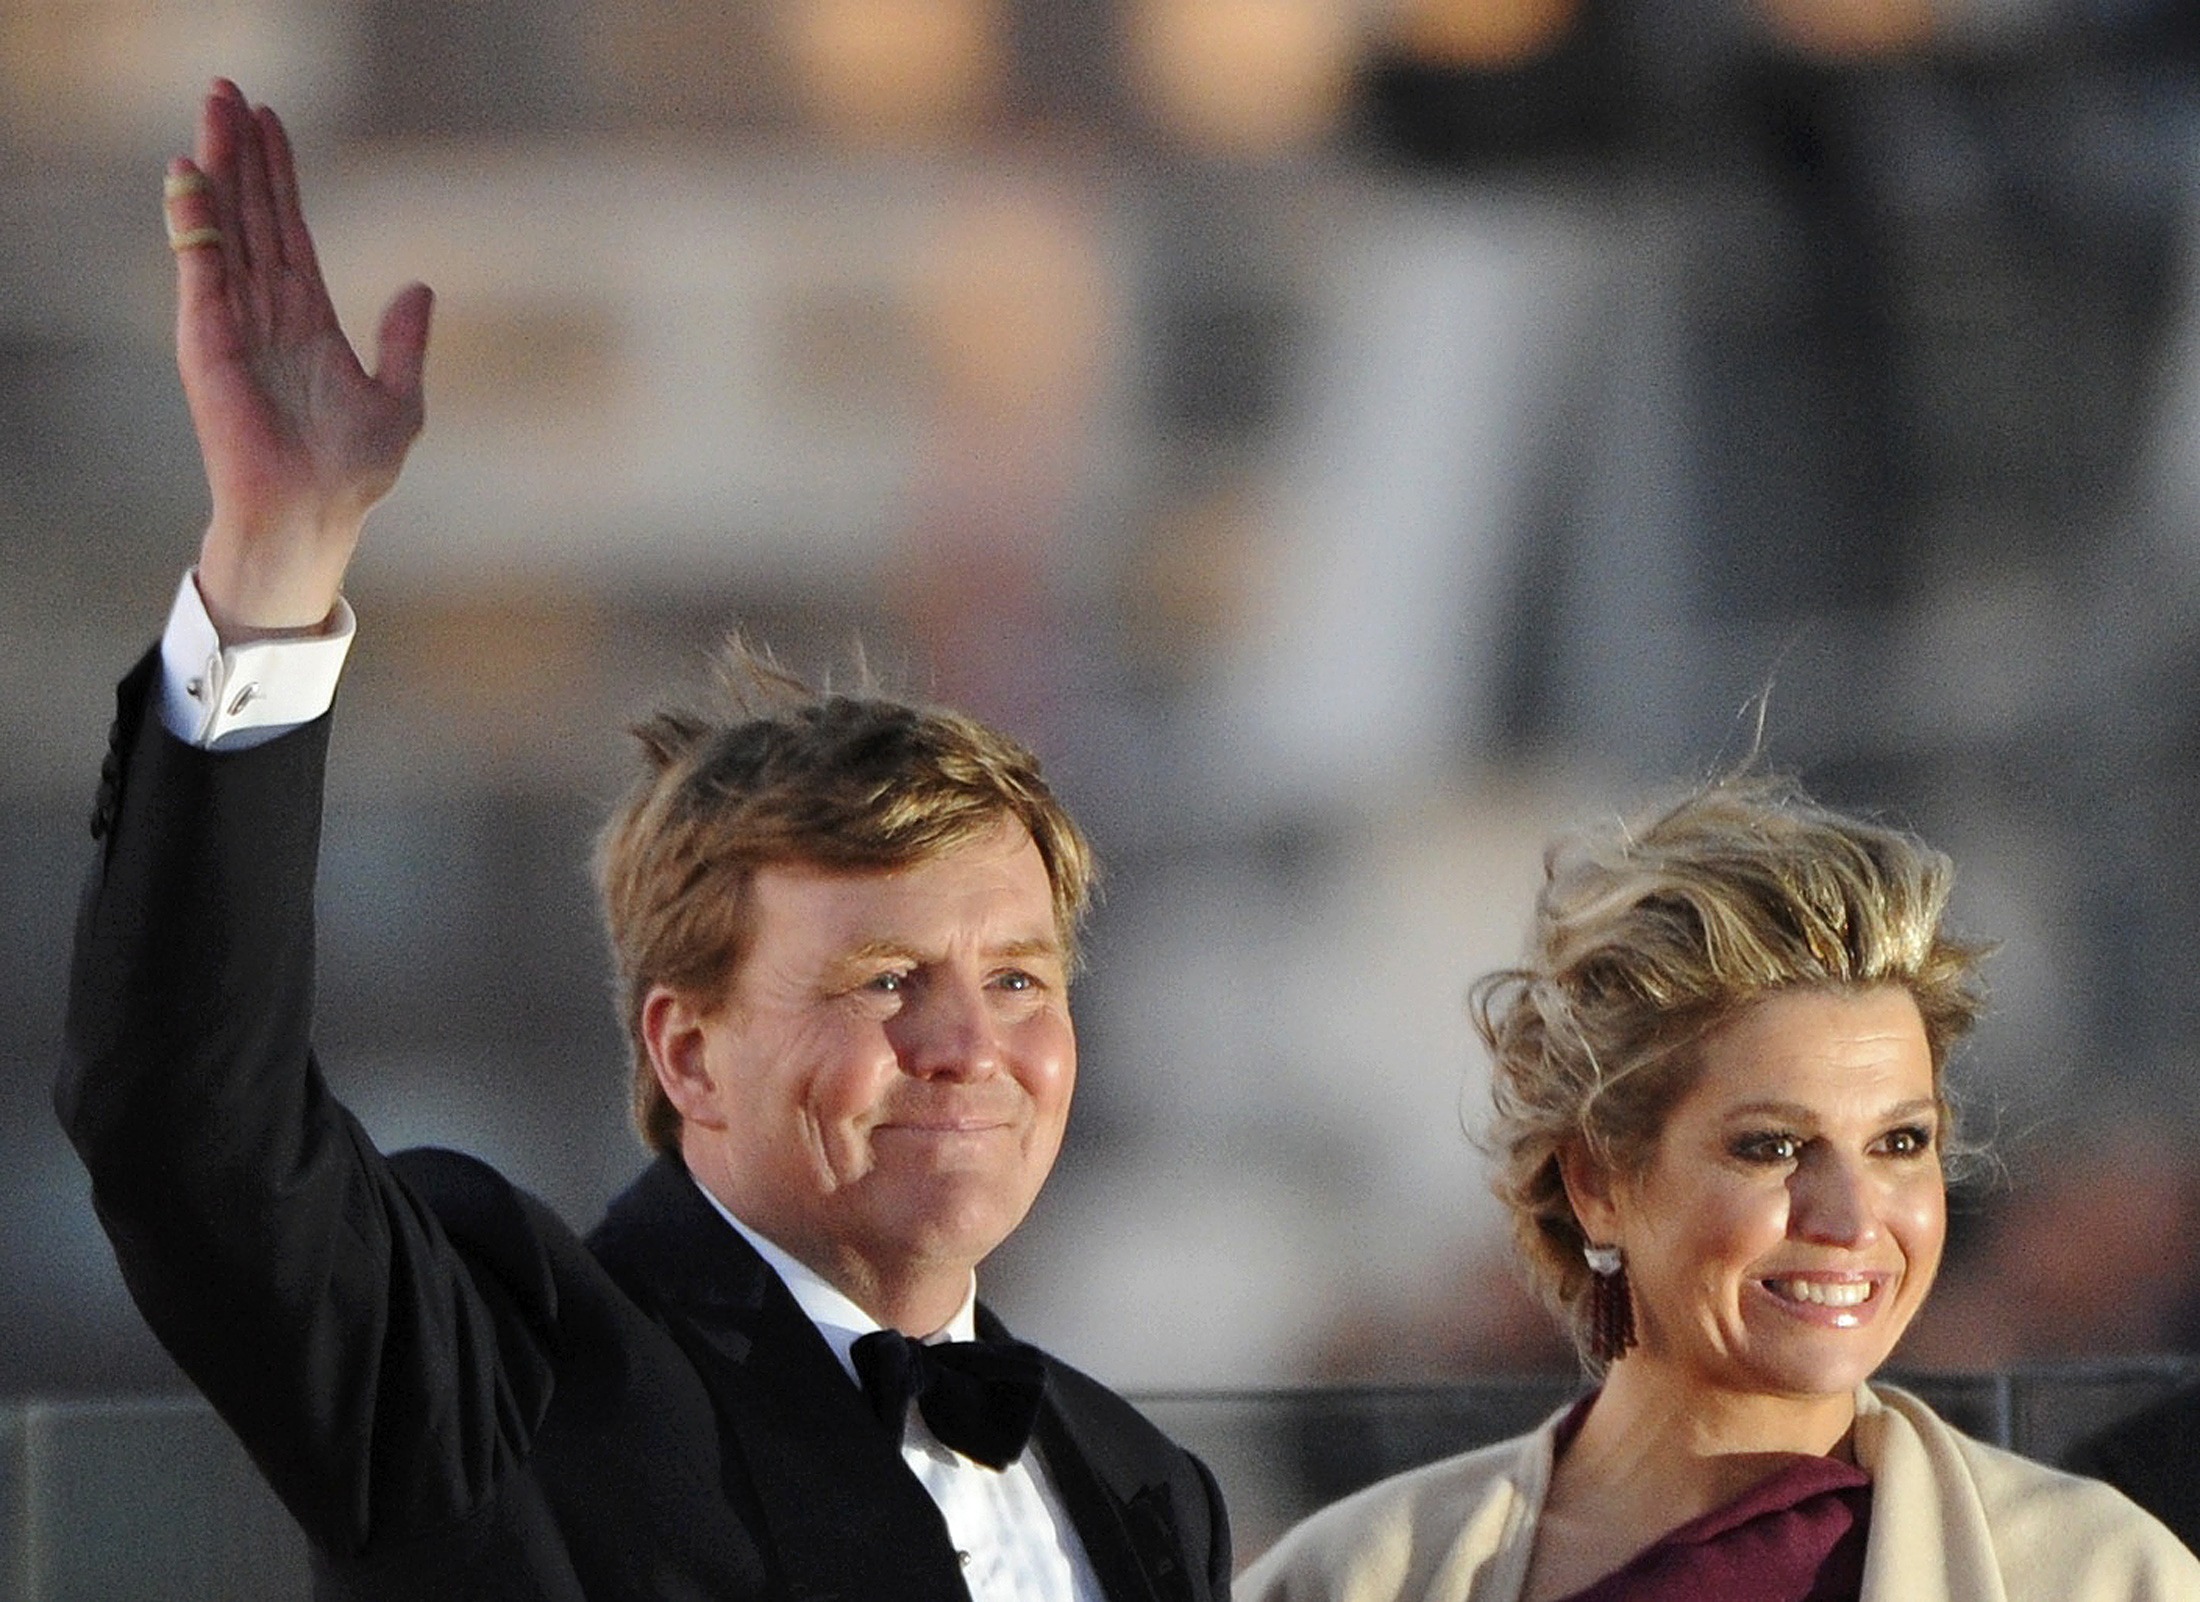 Orange celebrations as King Willem-Alexander takes Dutch throne